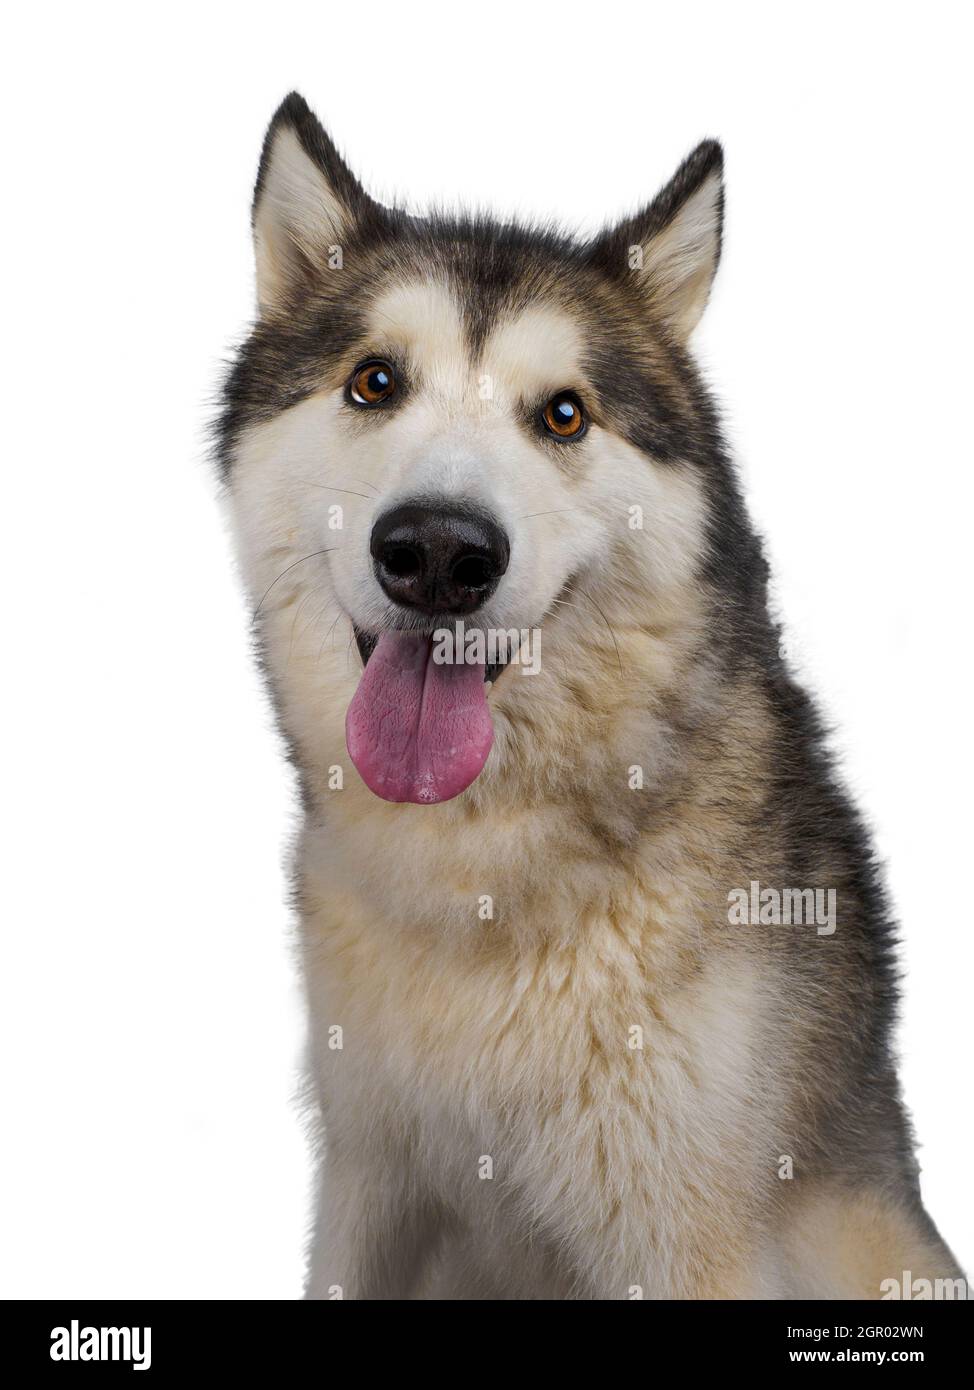 Studio image of an Alaskan Malamute dog. Stock Photo